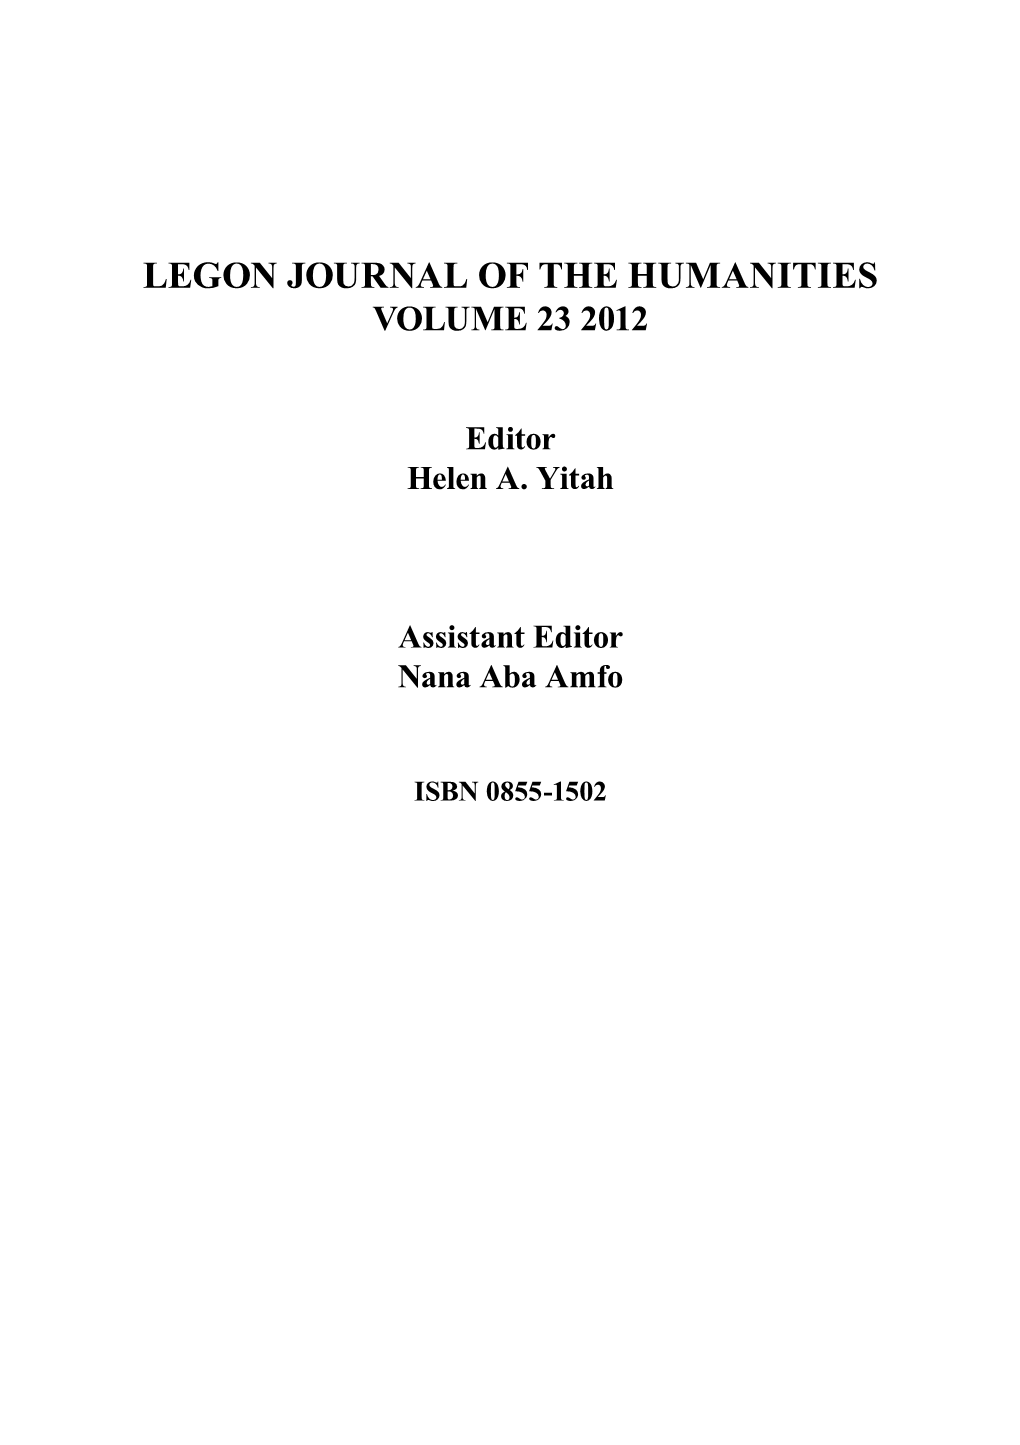 Legon Journal of the Humanities Volume 23 2012